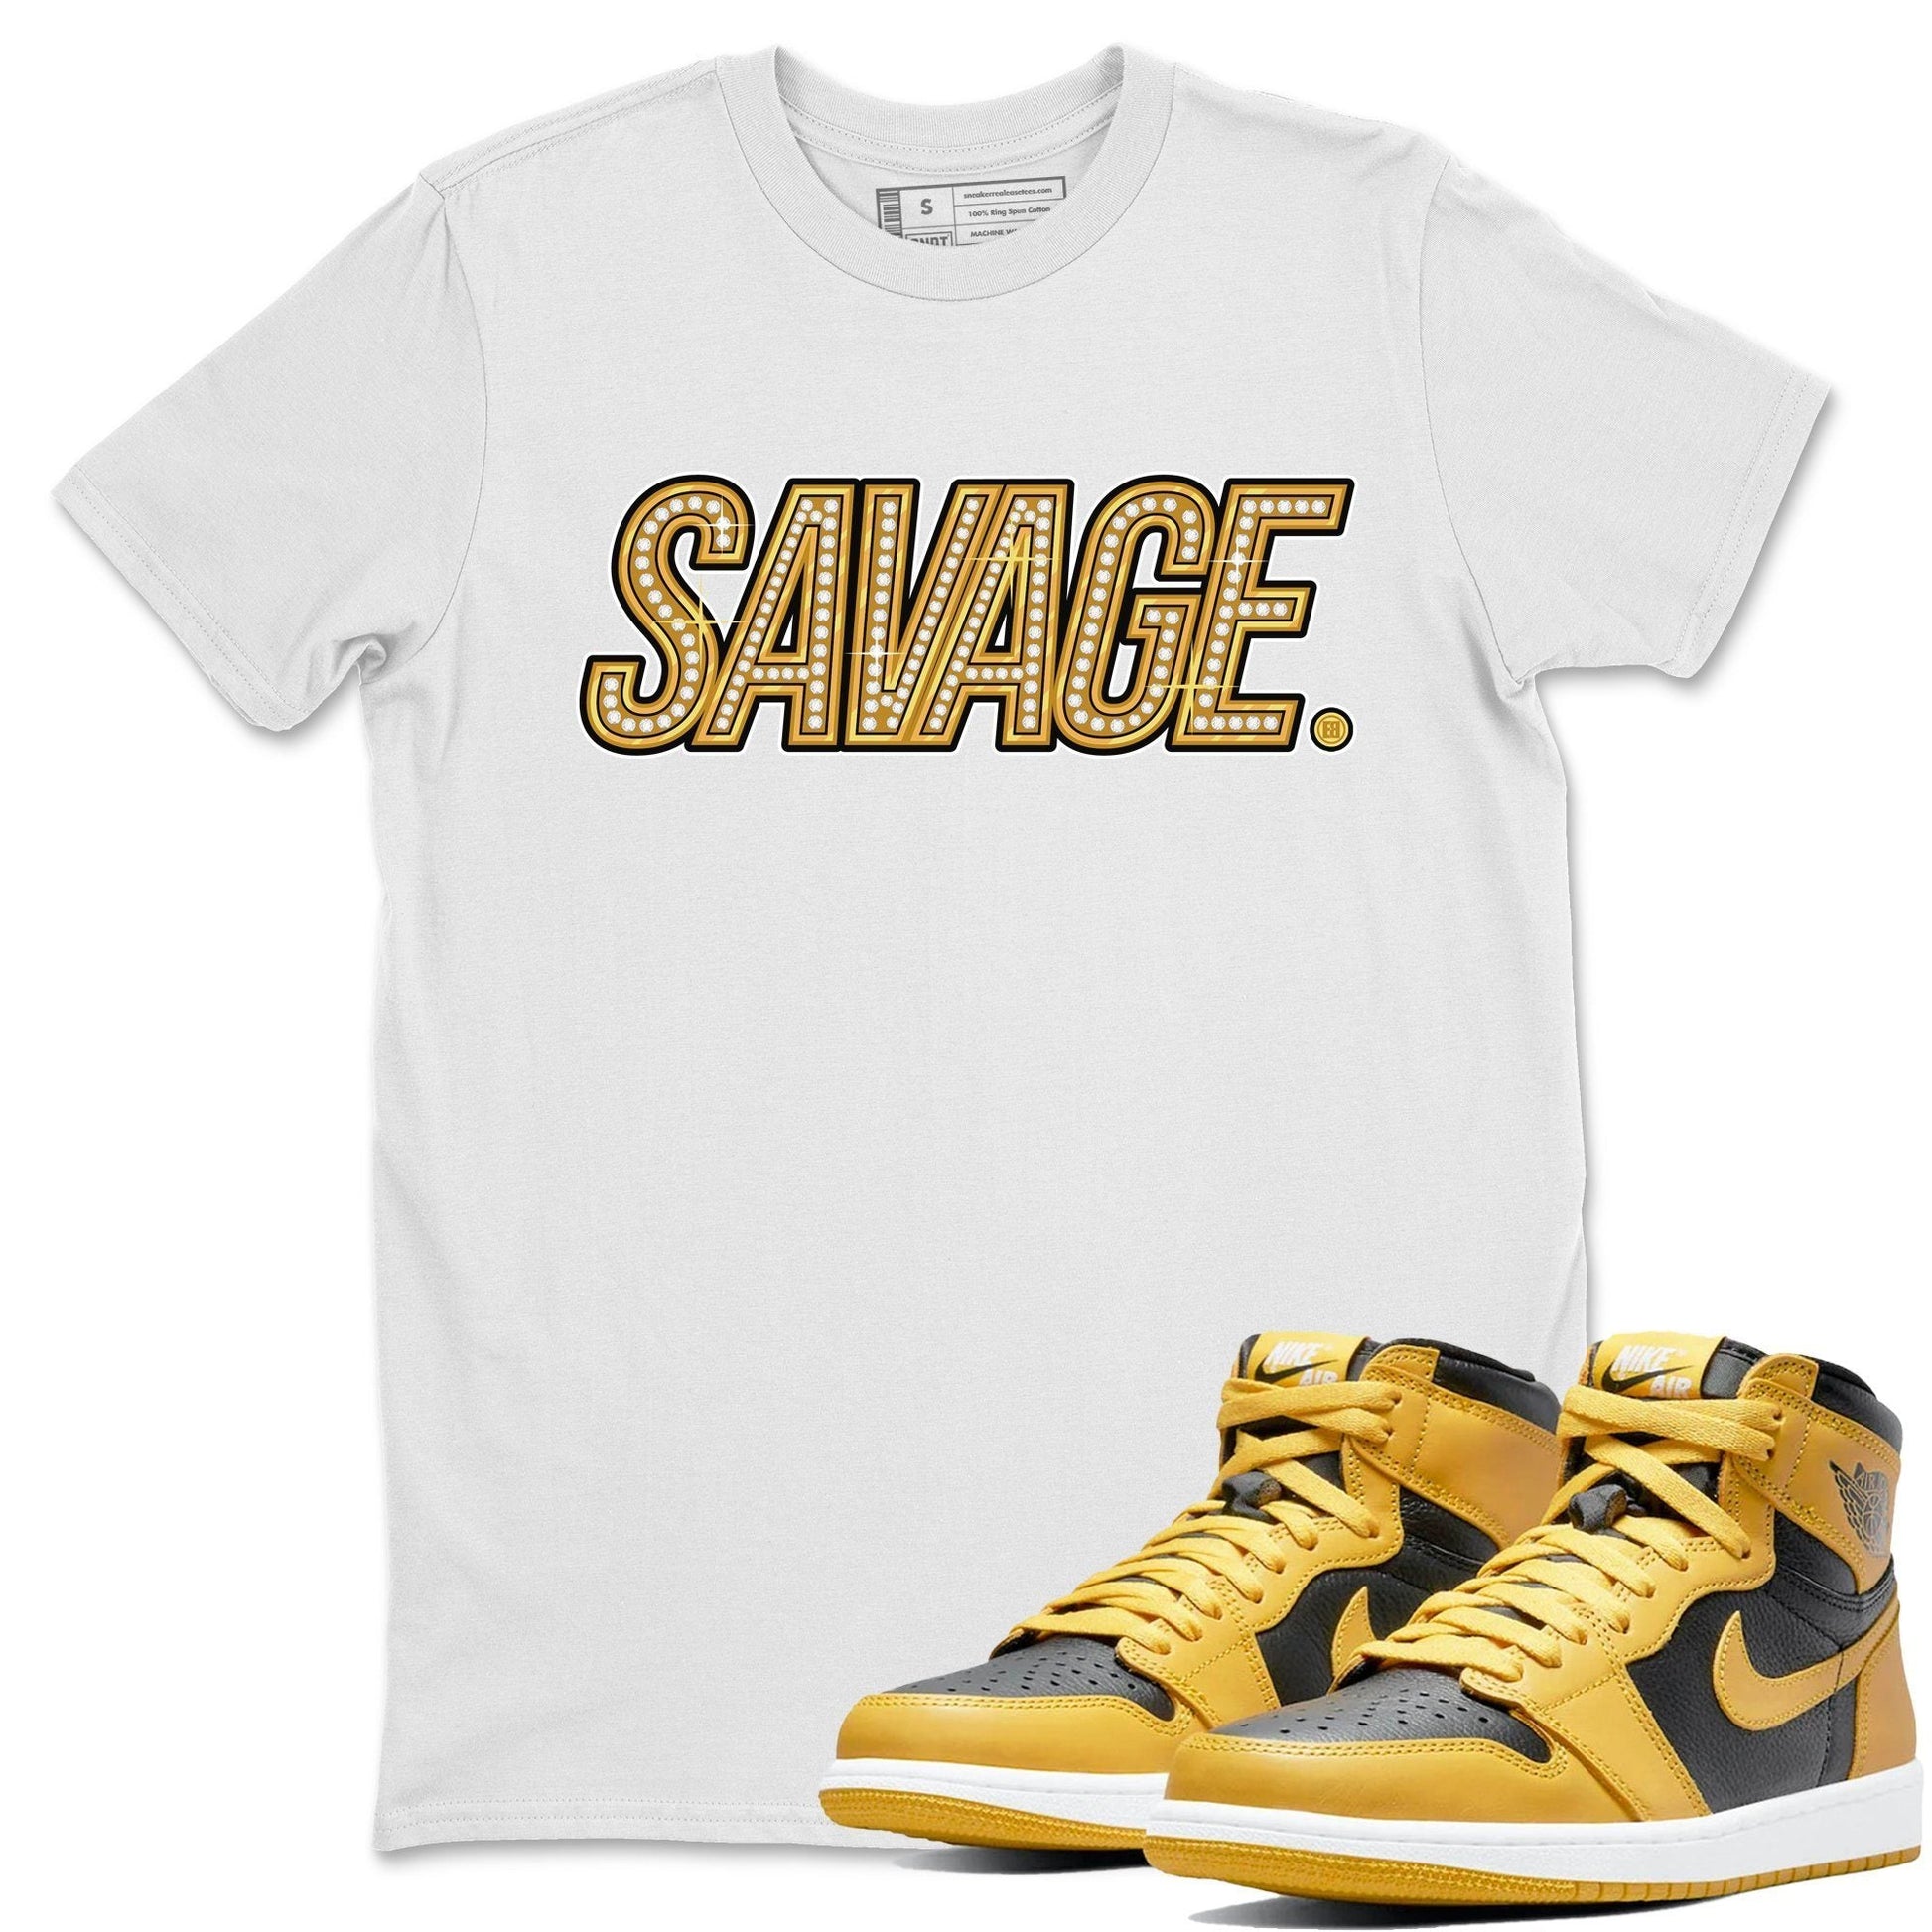 Jordan 1 Pollen Sneaker Match Tees Savage Sneaker Tees Jordan 1 Pollen Sneaker Release Tees Unisex Shirts